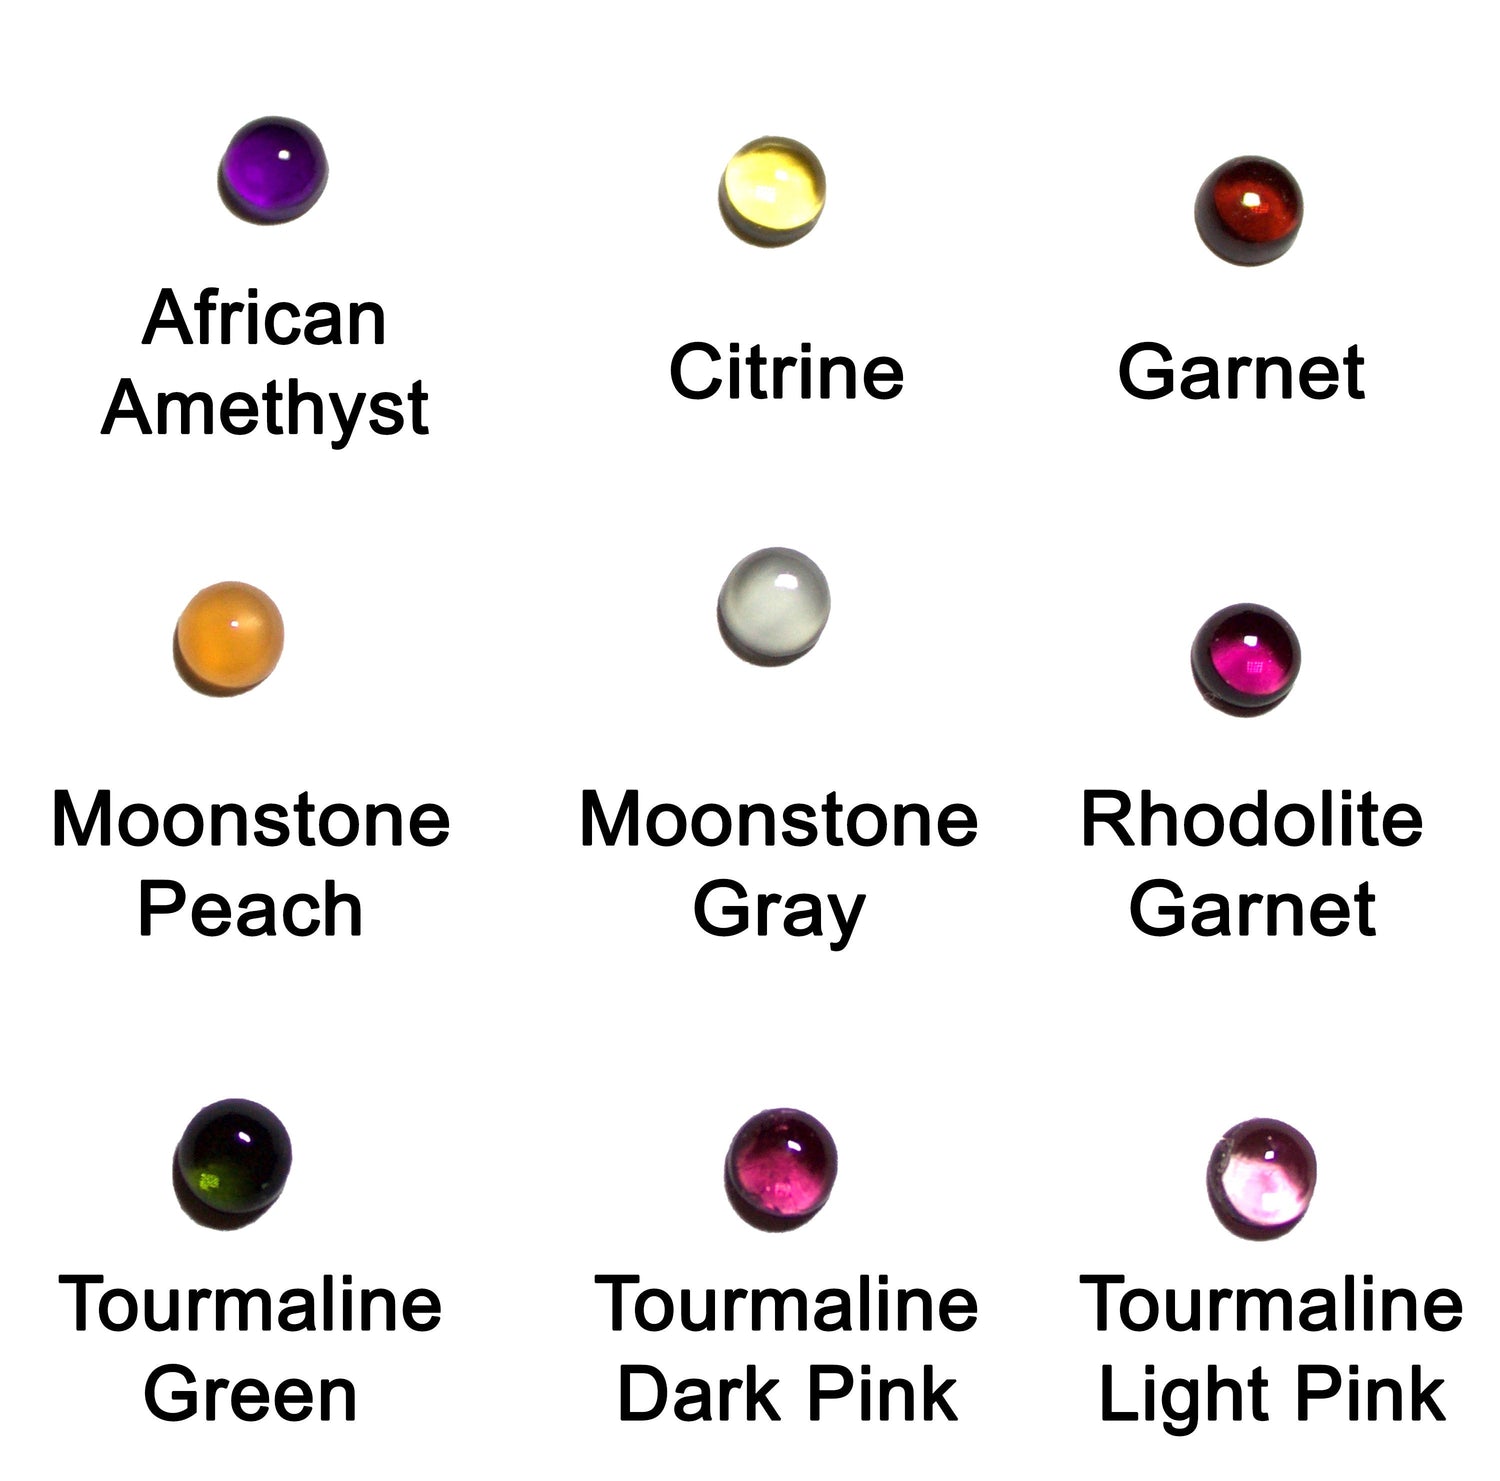 gemstone chart for hot air balloon pendant. Gemstones shown are african amethyst, citrine, garnet, peach moonstone, gray moonstone, rhodolite garnet, green tourmaline, dark pink tourmaline, and light pink tourmaline